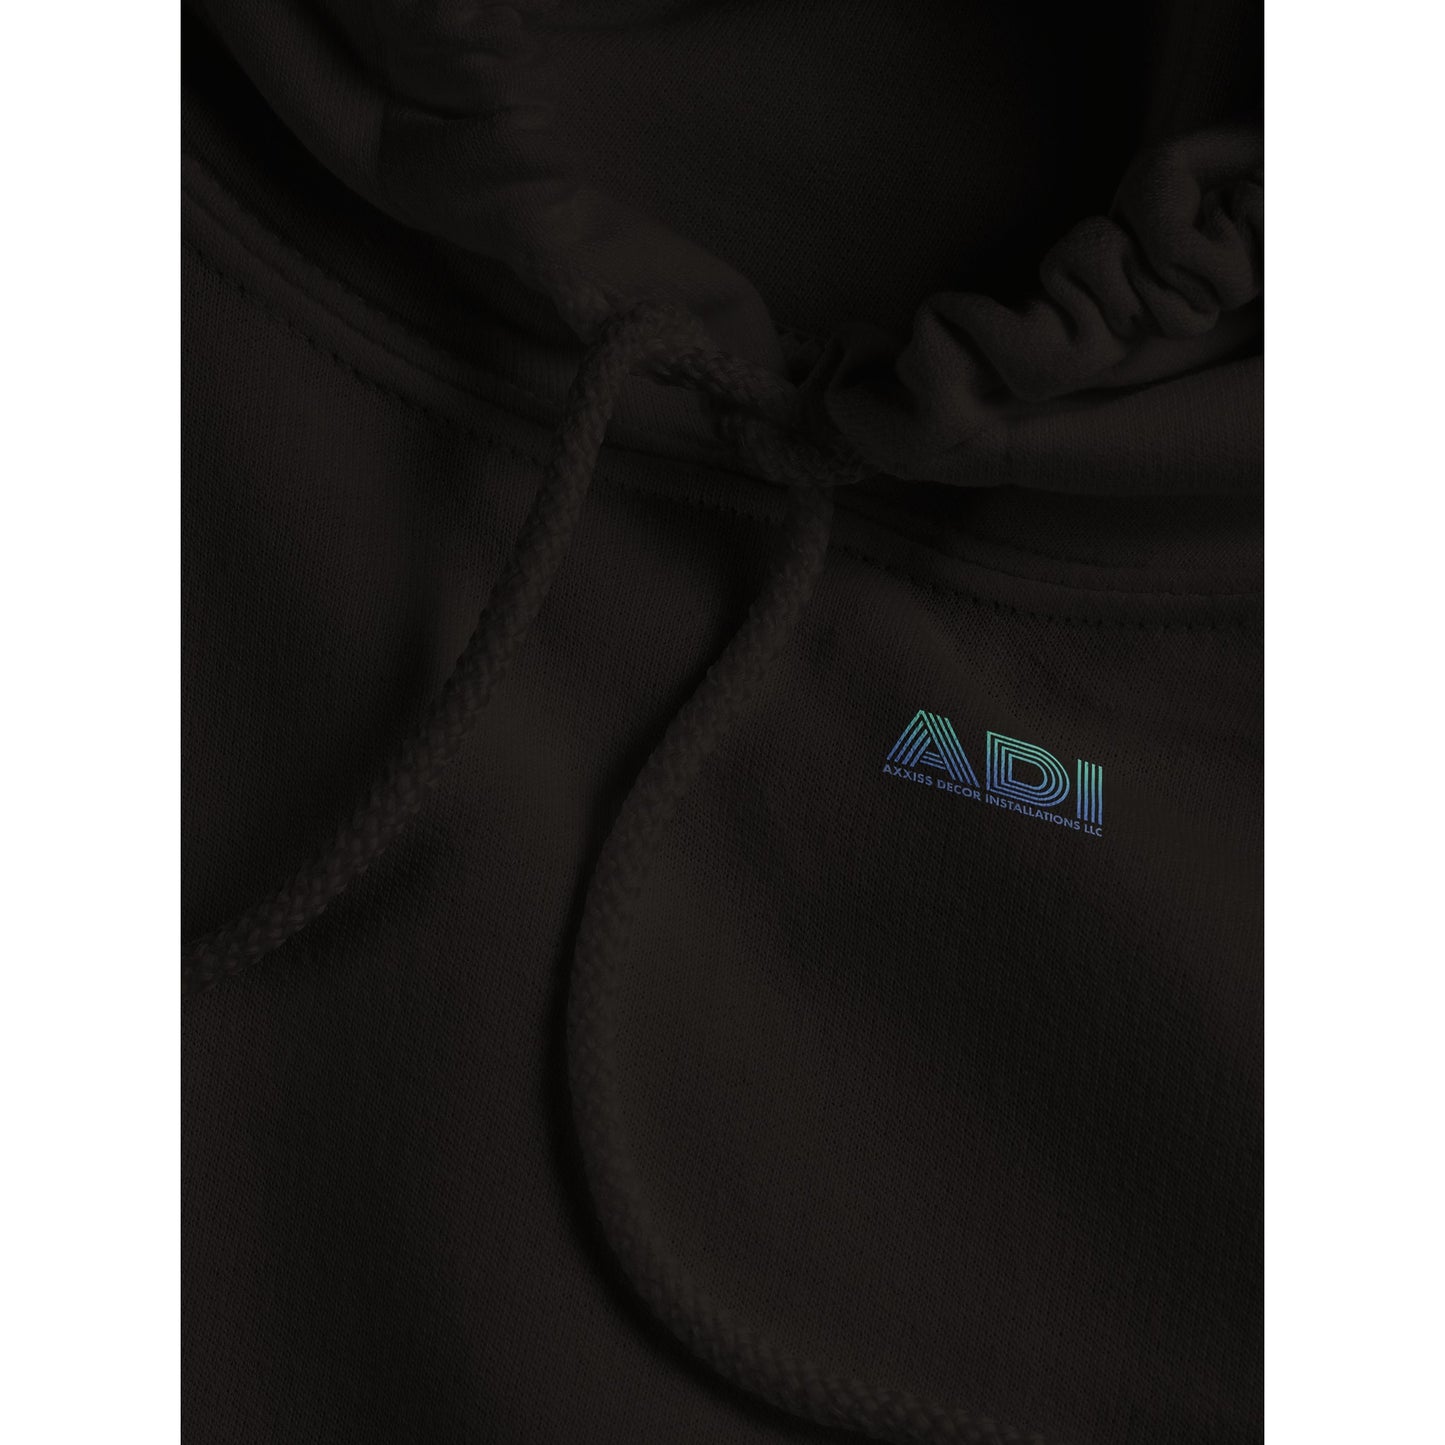 ADI-Axxis Decor Installations, LLC - Classic Unisex Pullover Hoodie